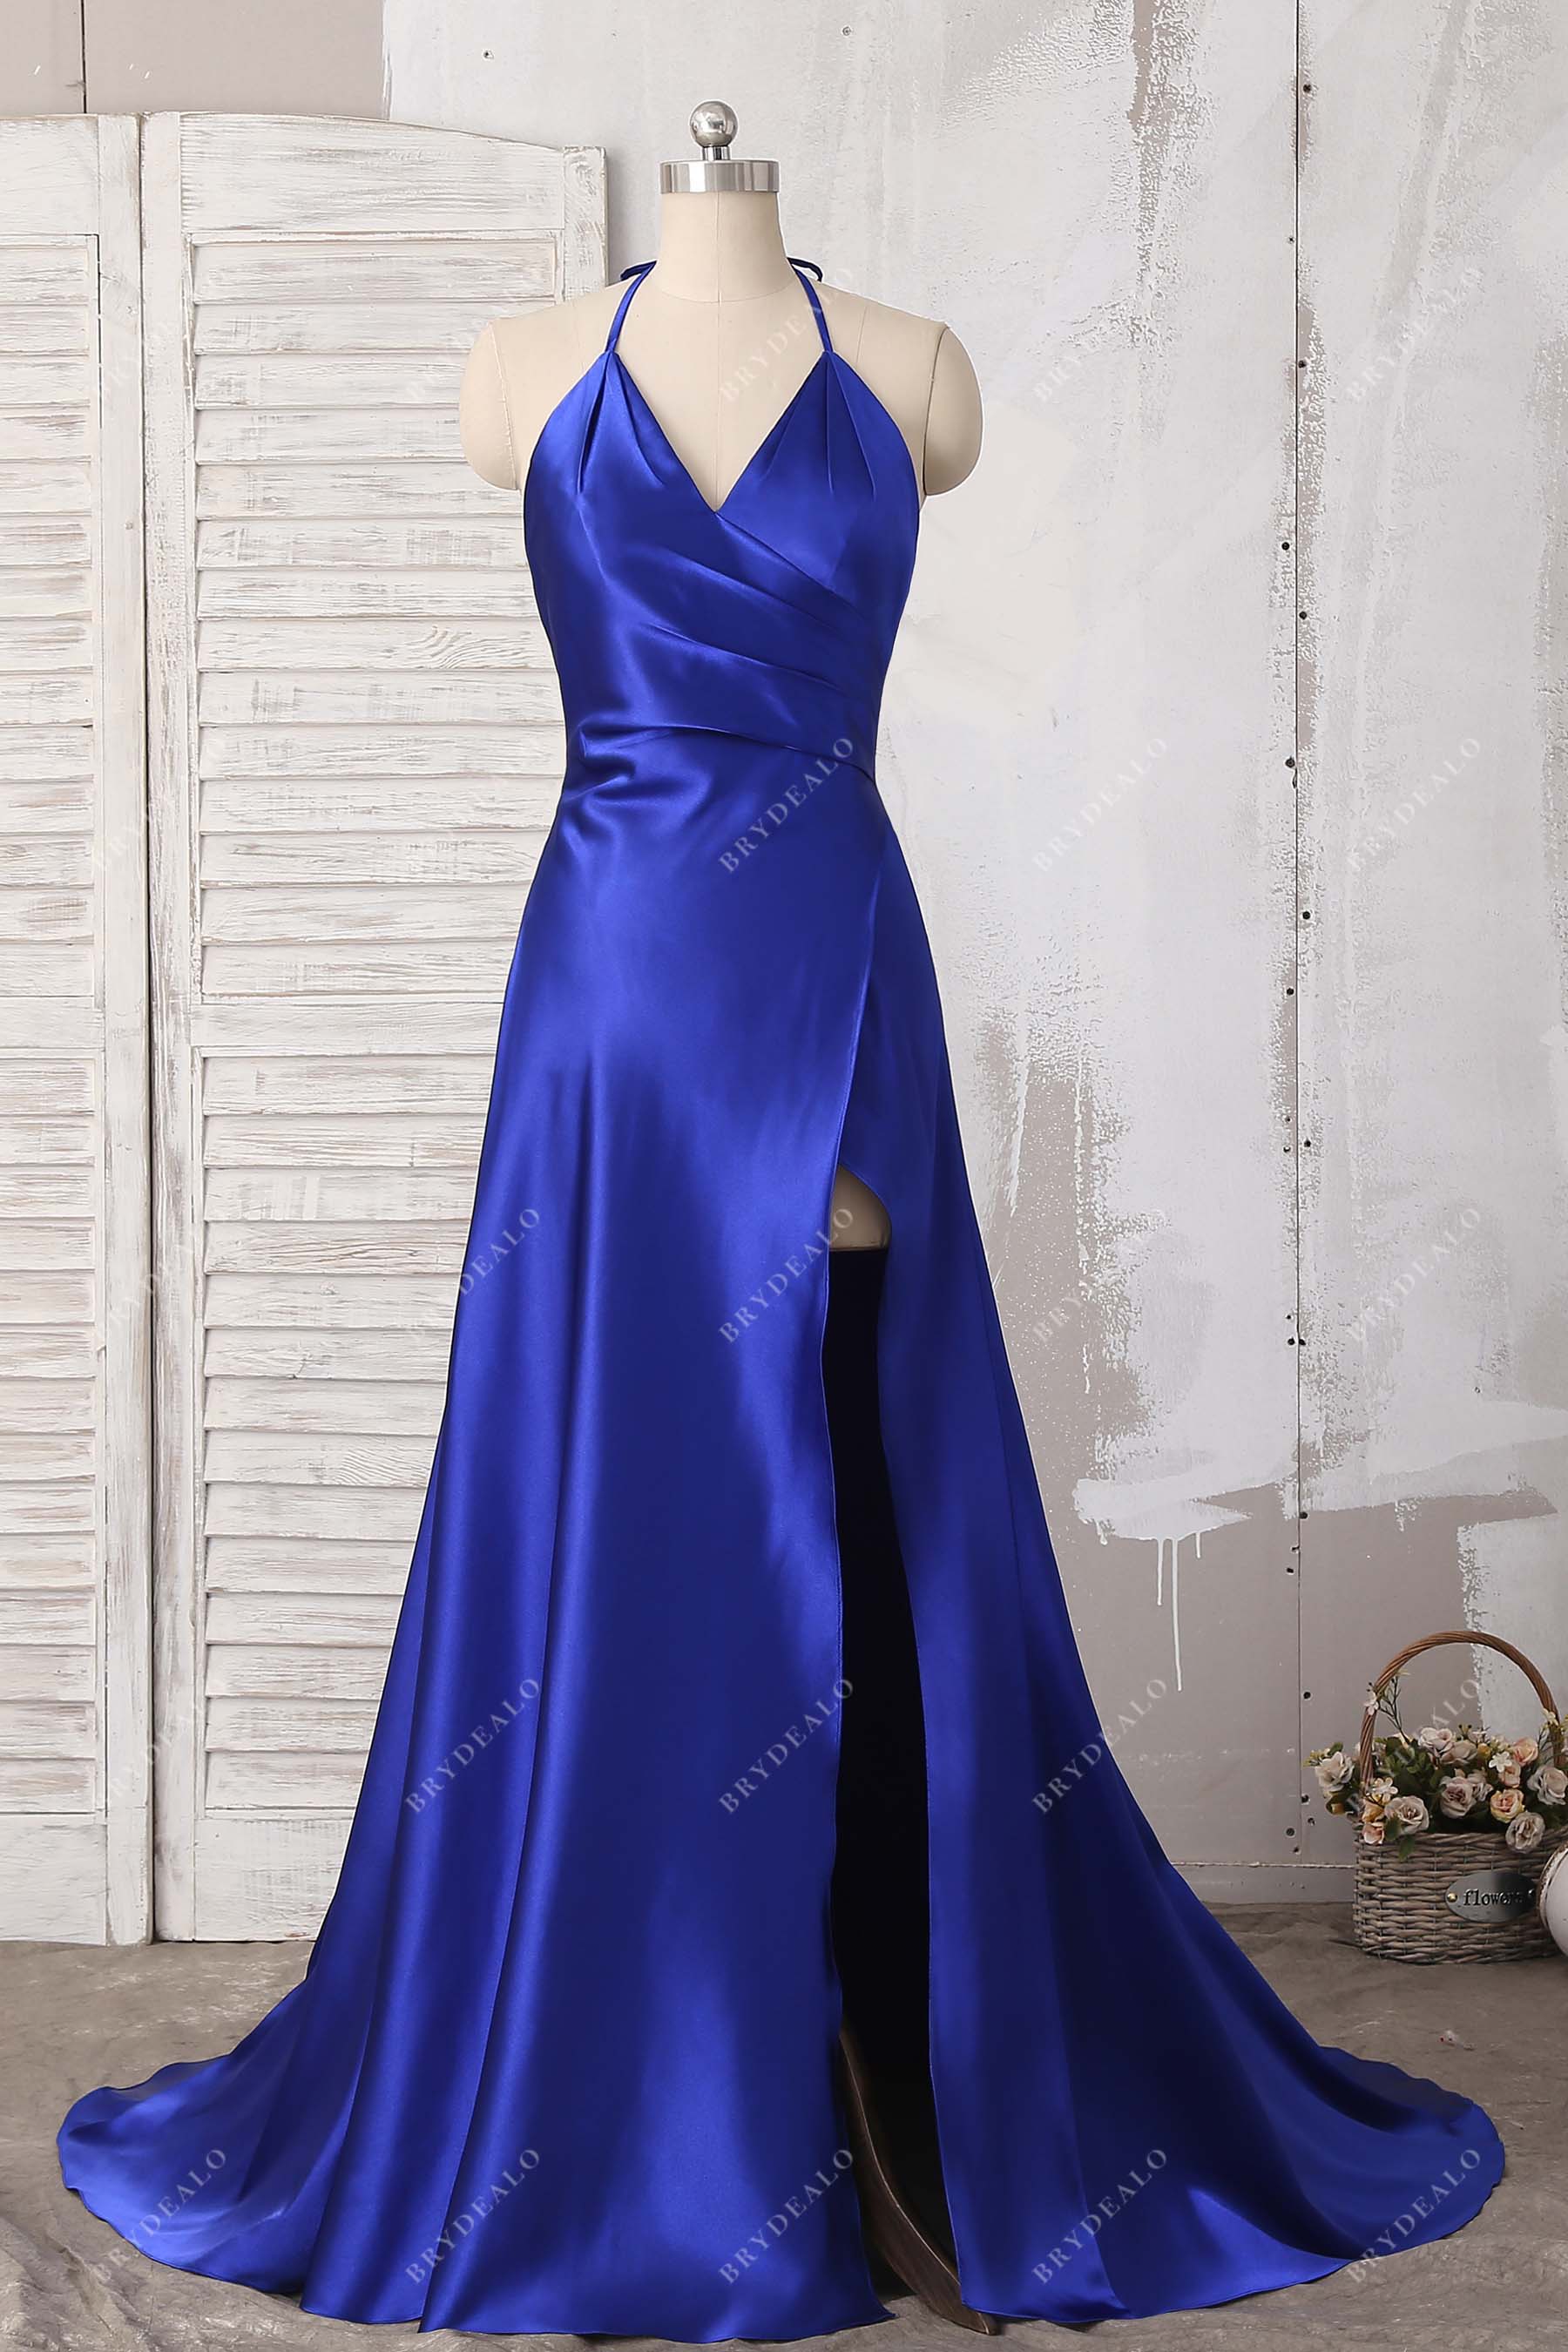 royal blue A-line satin prom dress